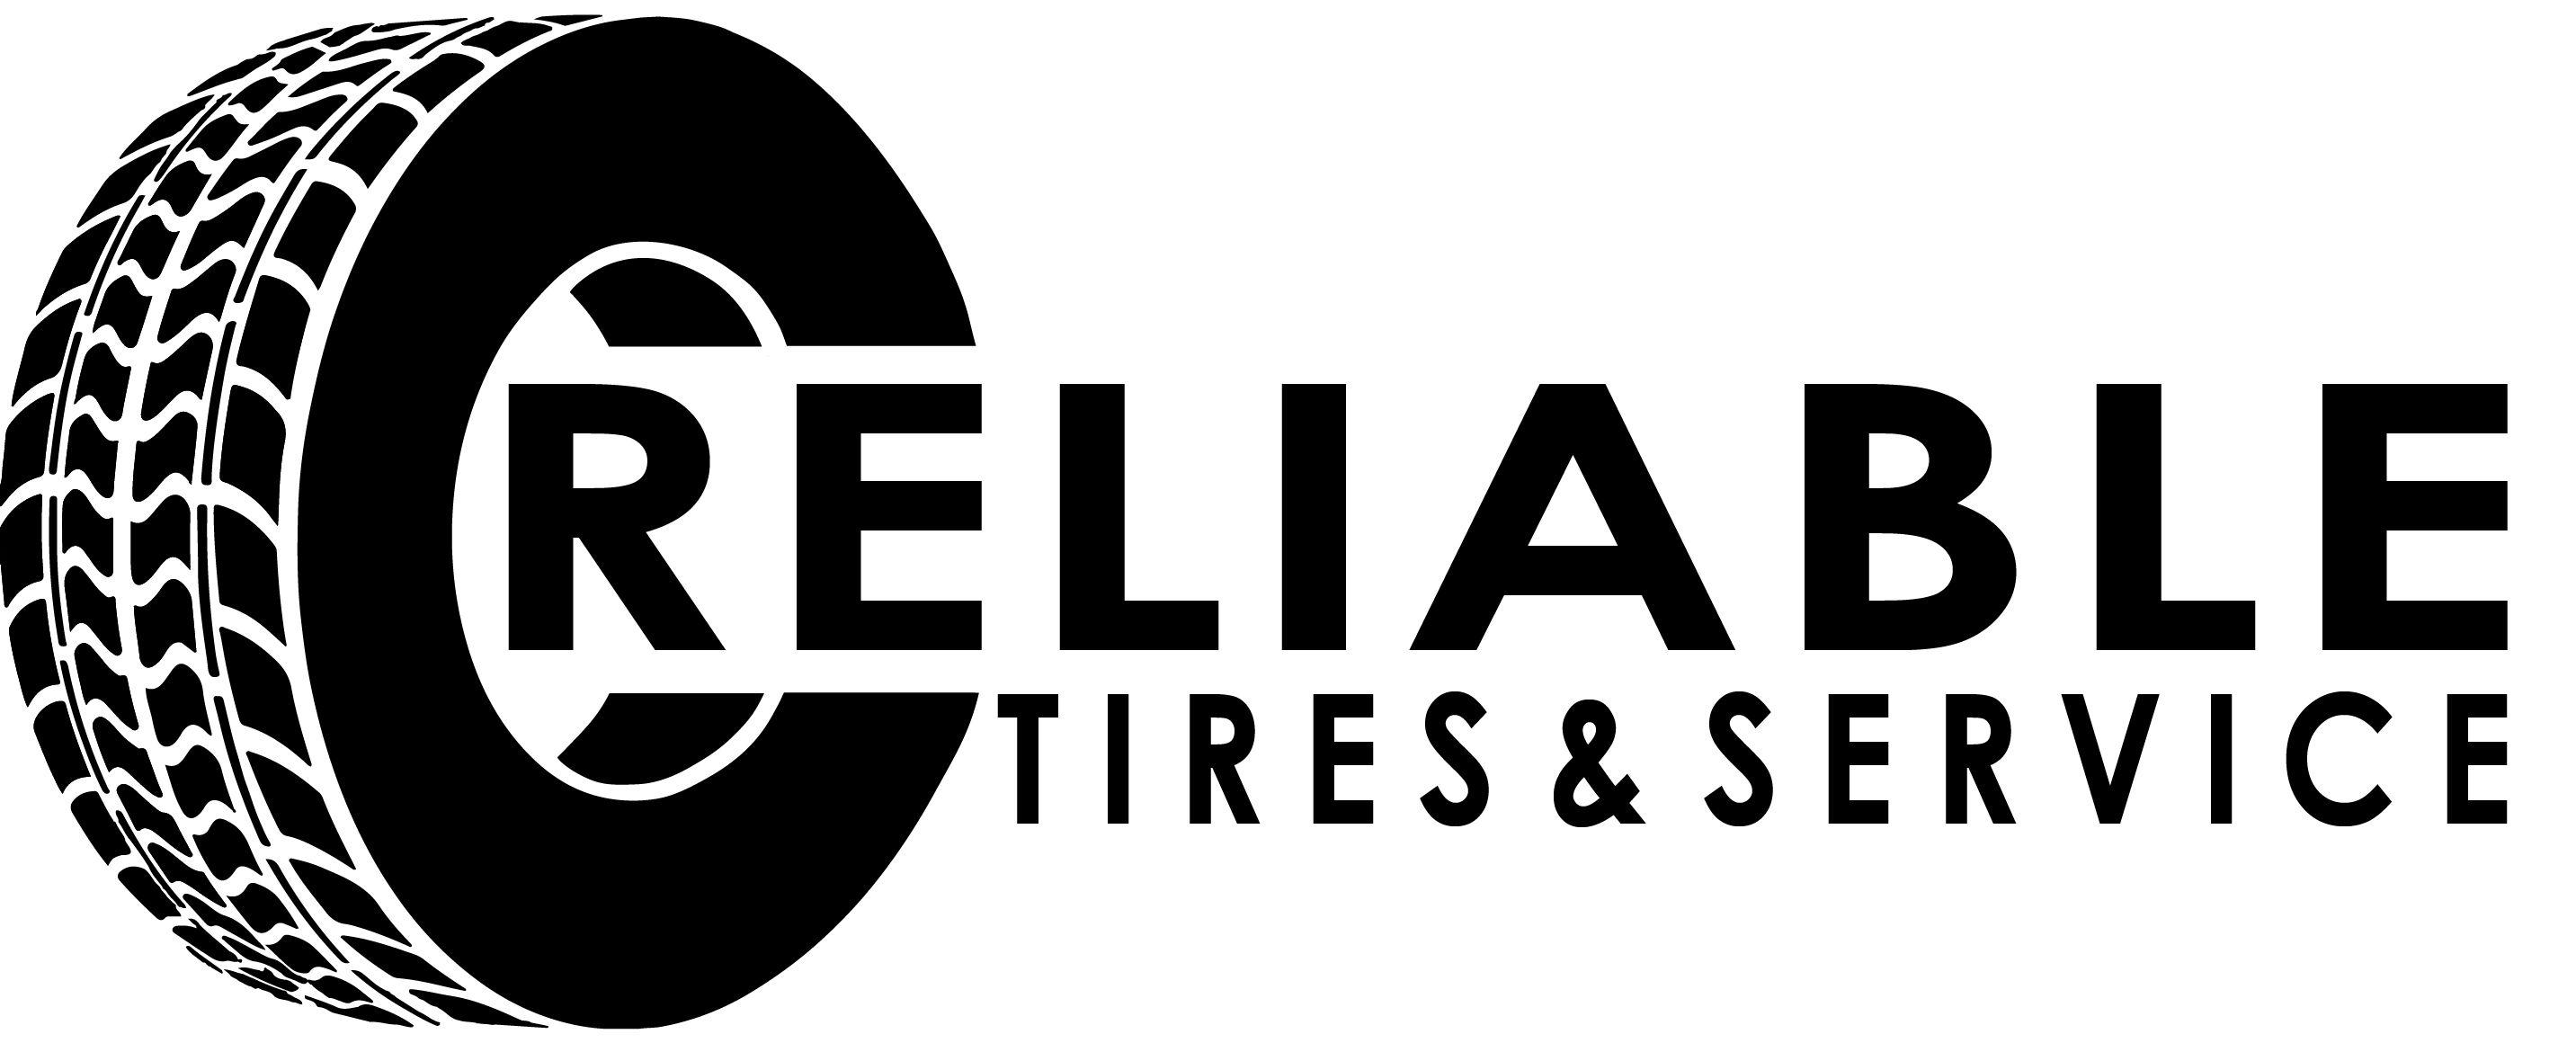 Tire Service Logo - Reliable Tires & Service